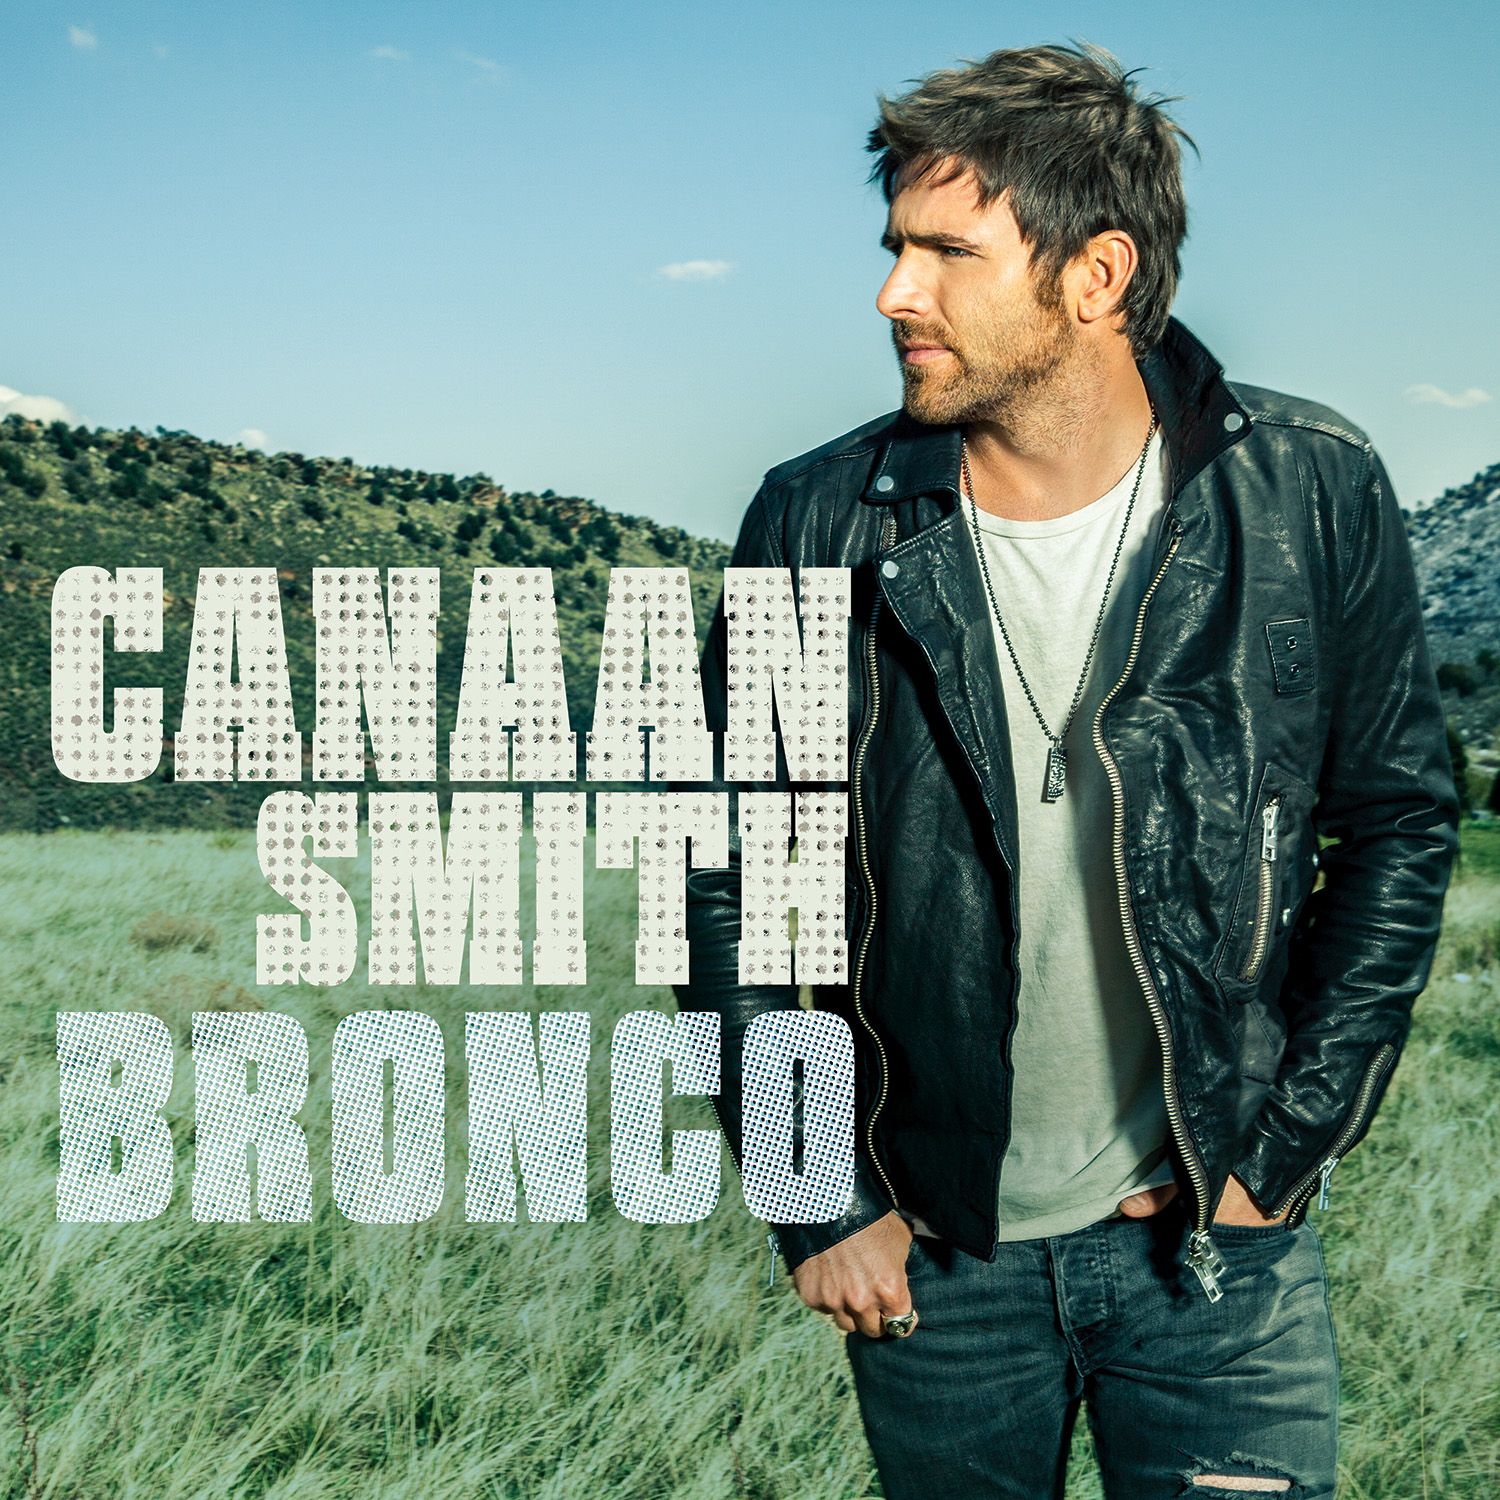 CANAAN SMITH TO RELEASE DEBUT ALBUM, BRONCO